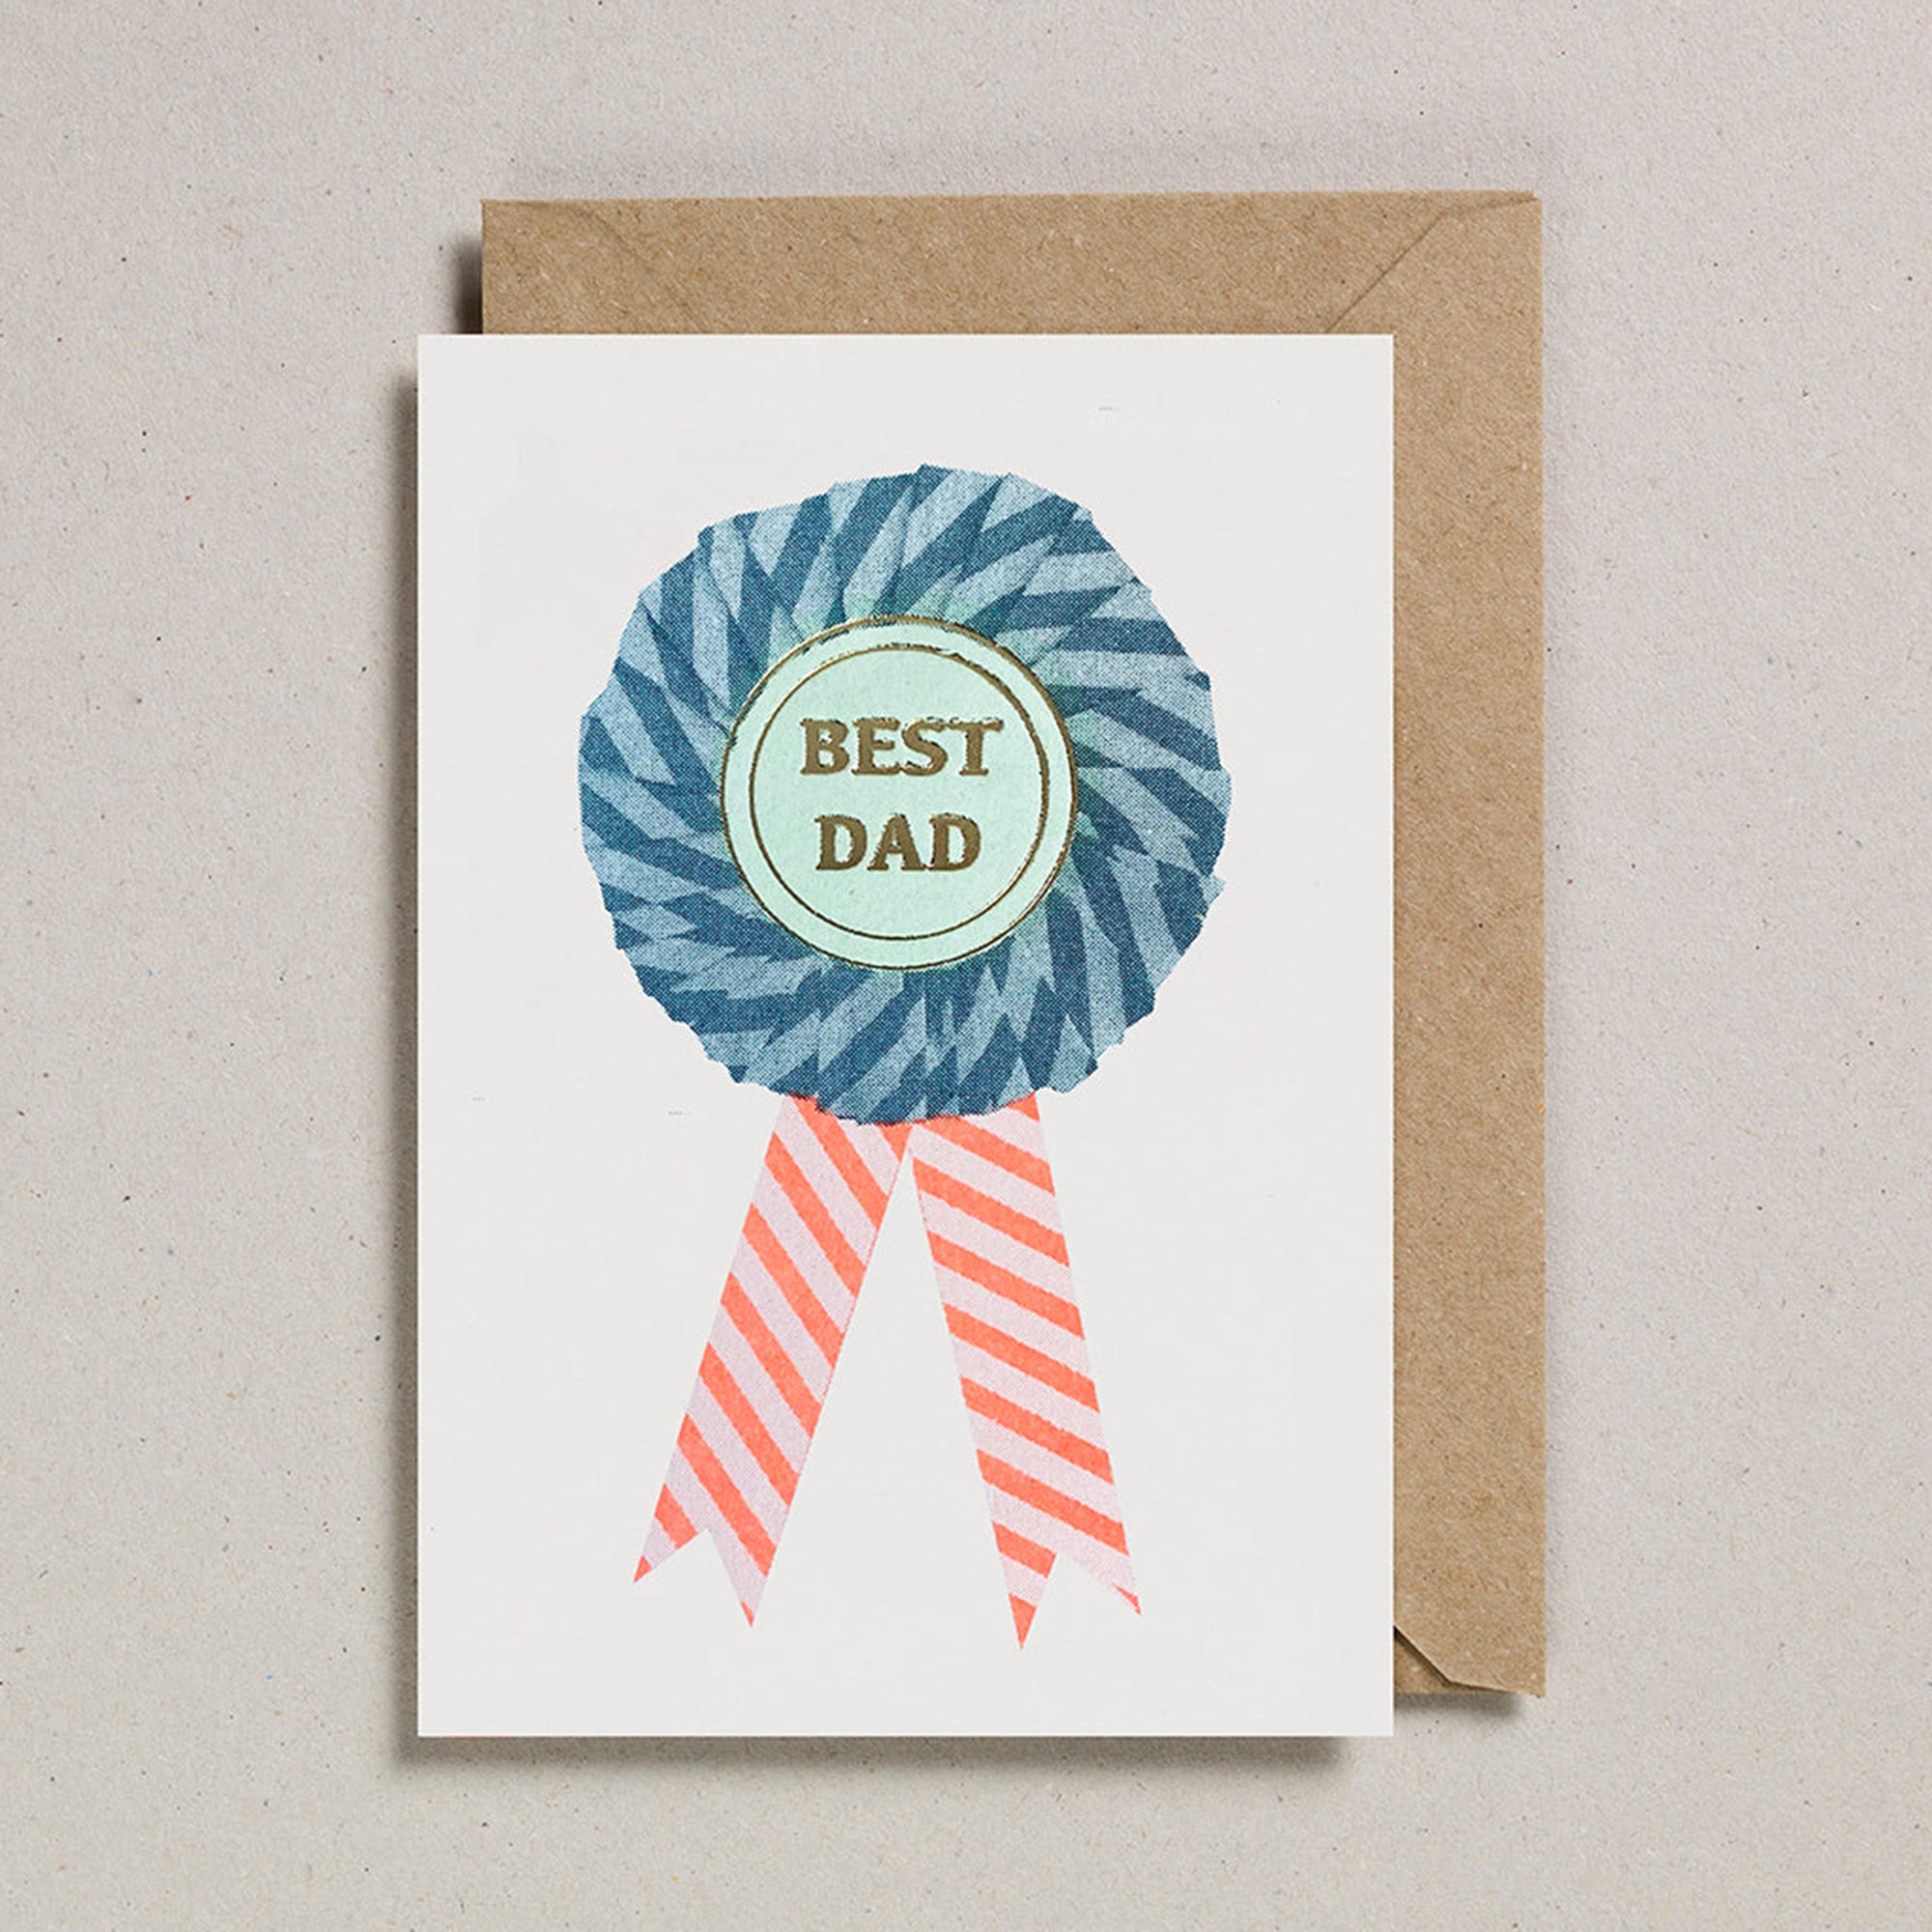 Best Dad rosette card